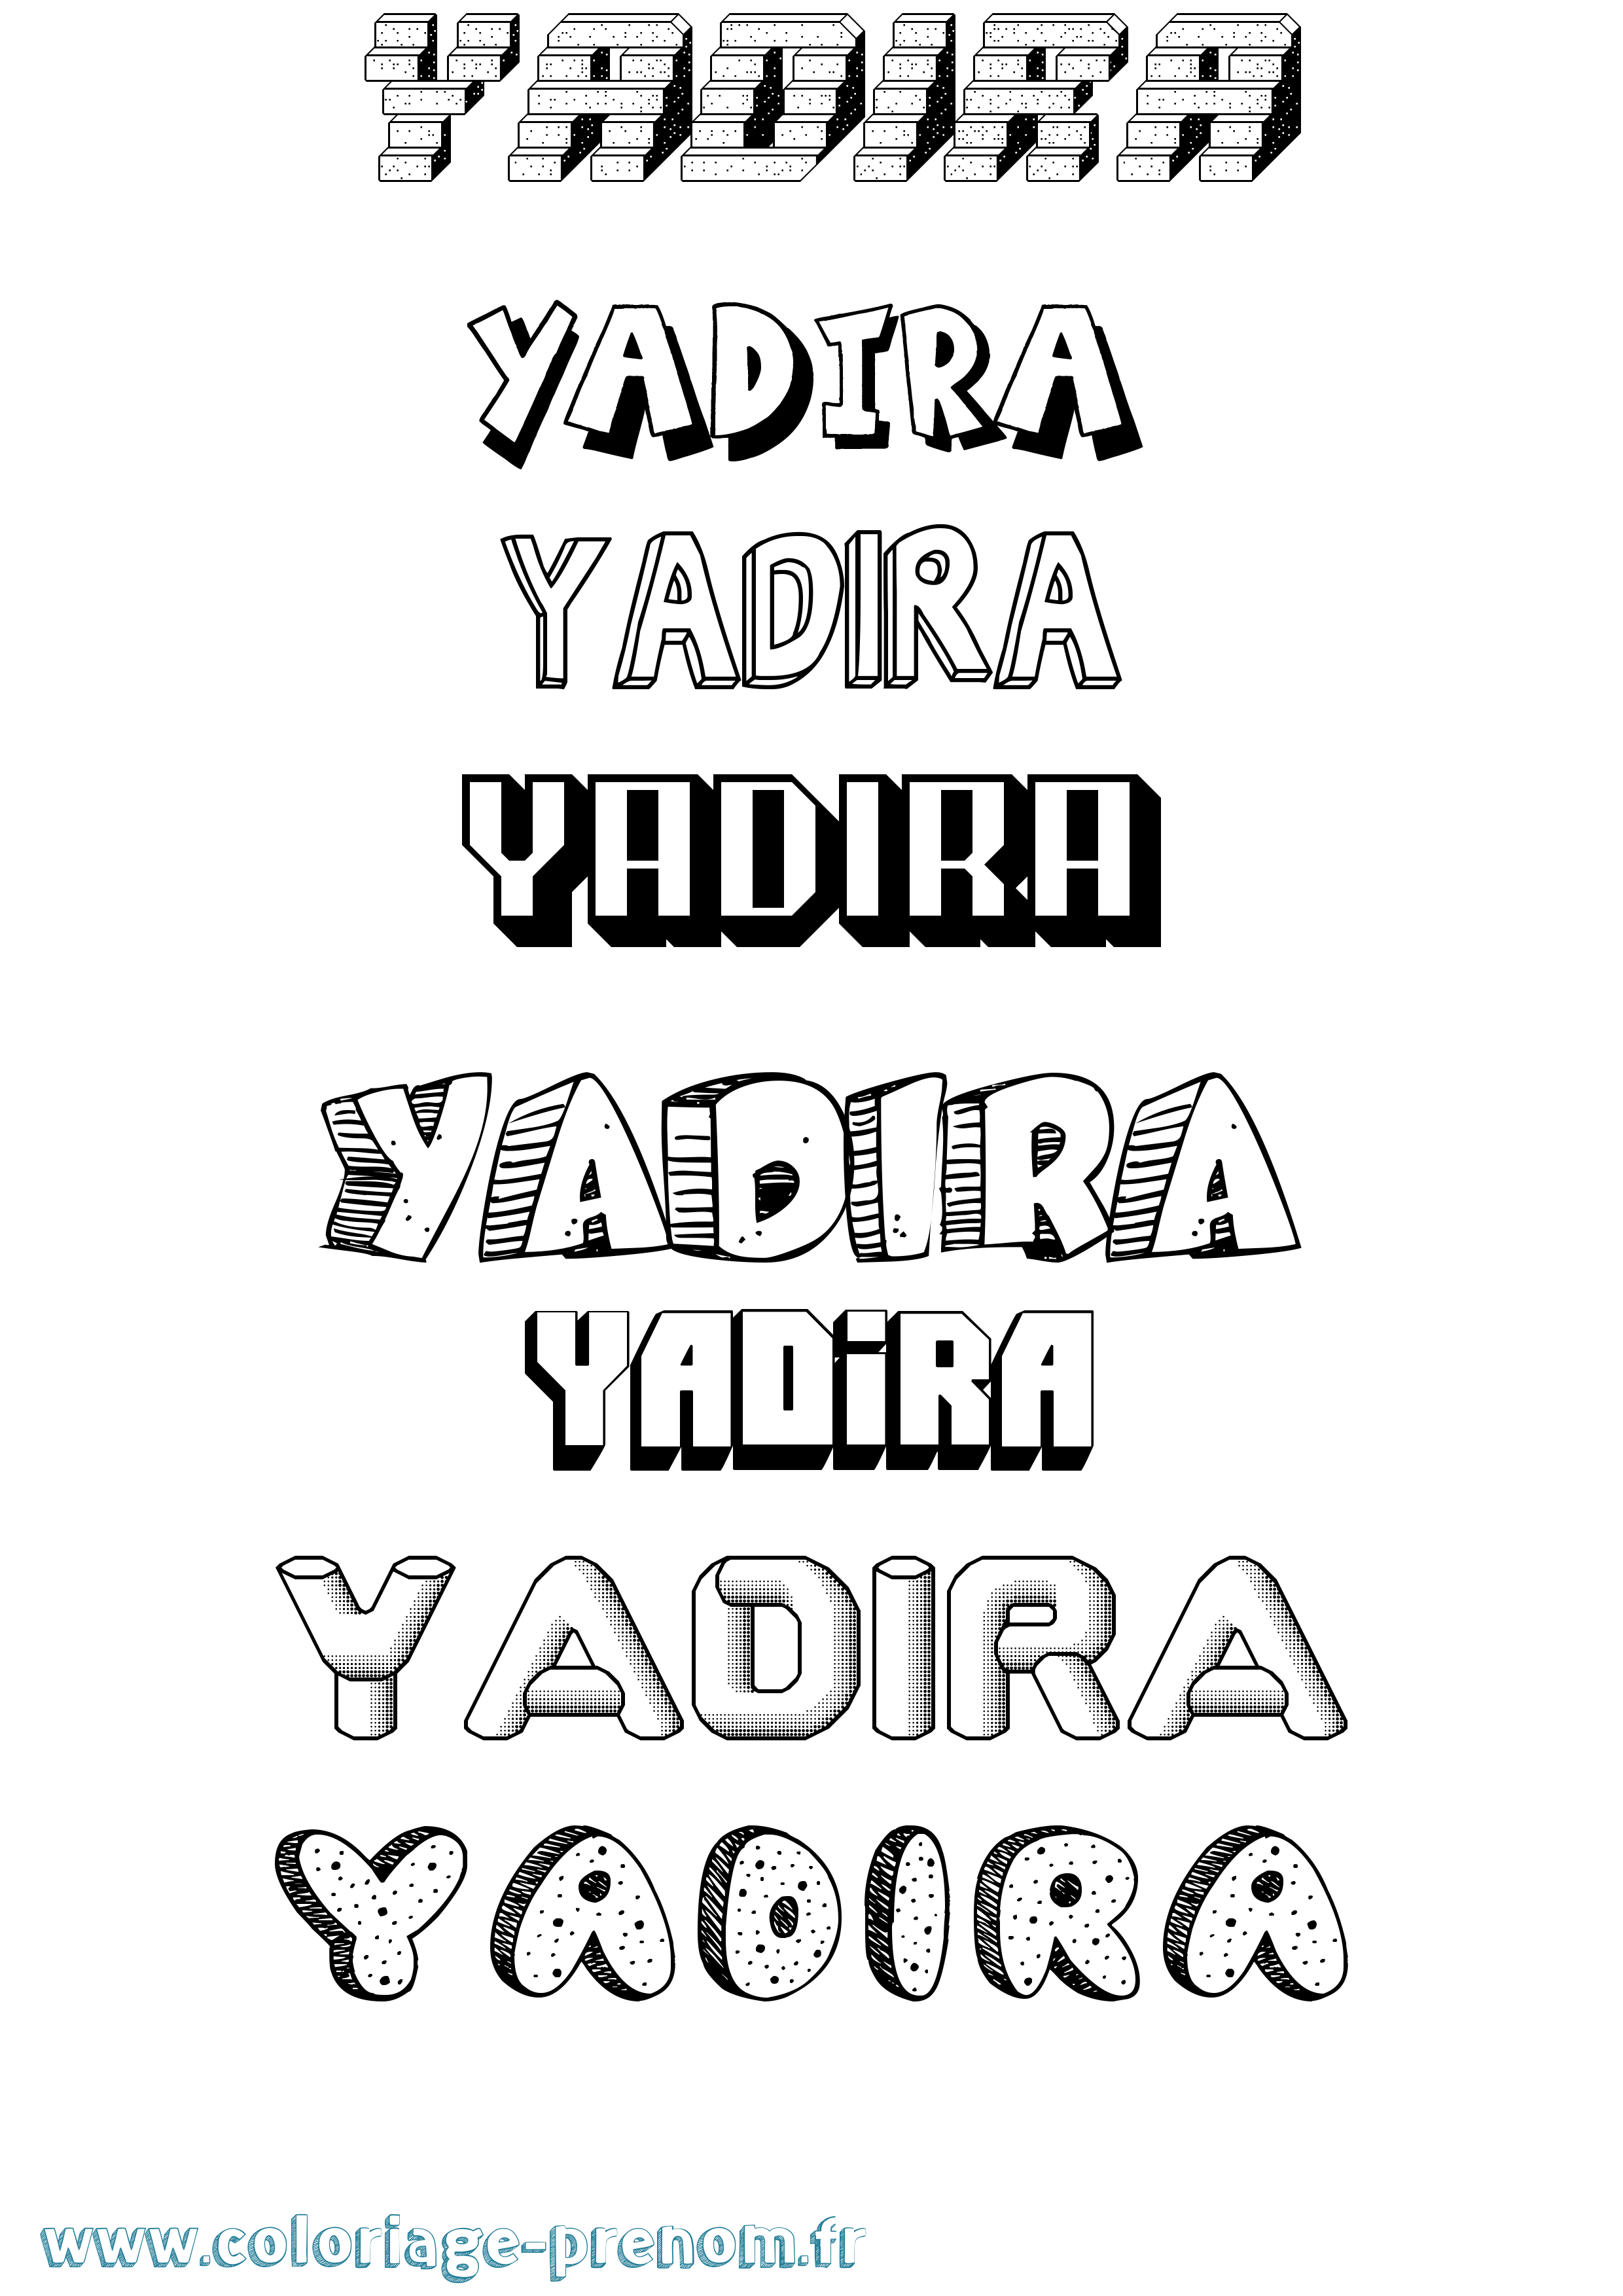 Coloriage prénom Yadira Effet 3D